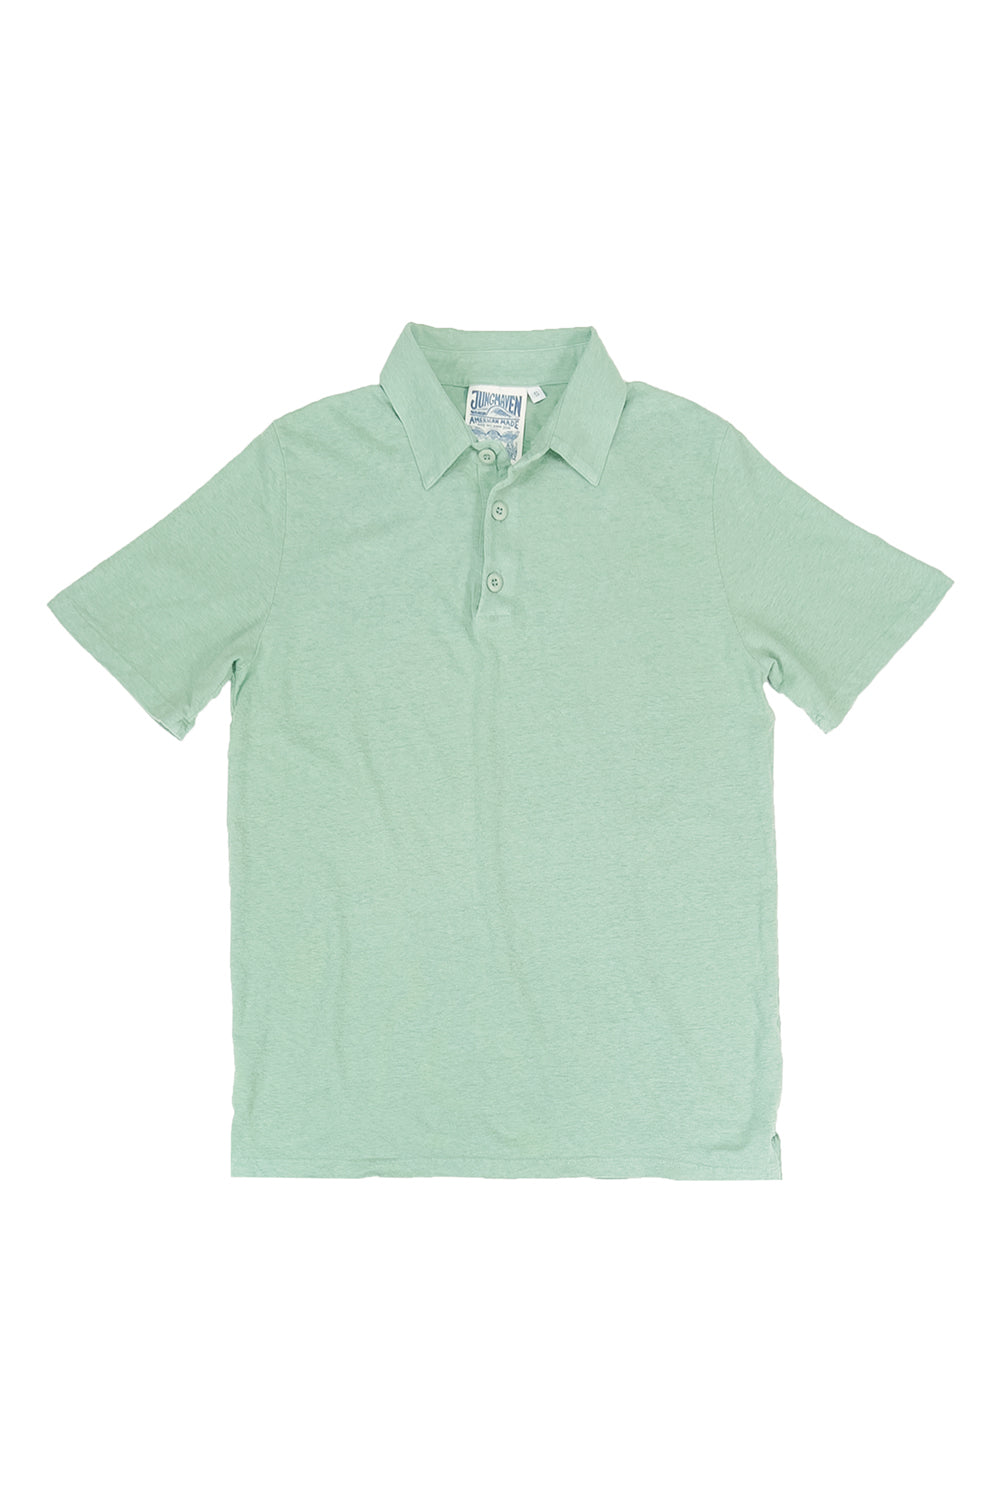 Camden Polo Shirt | Jungmaven Hemp Clothing & Accessories / Color: Sage Green